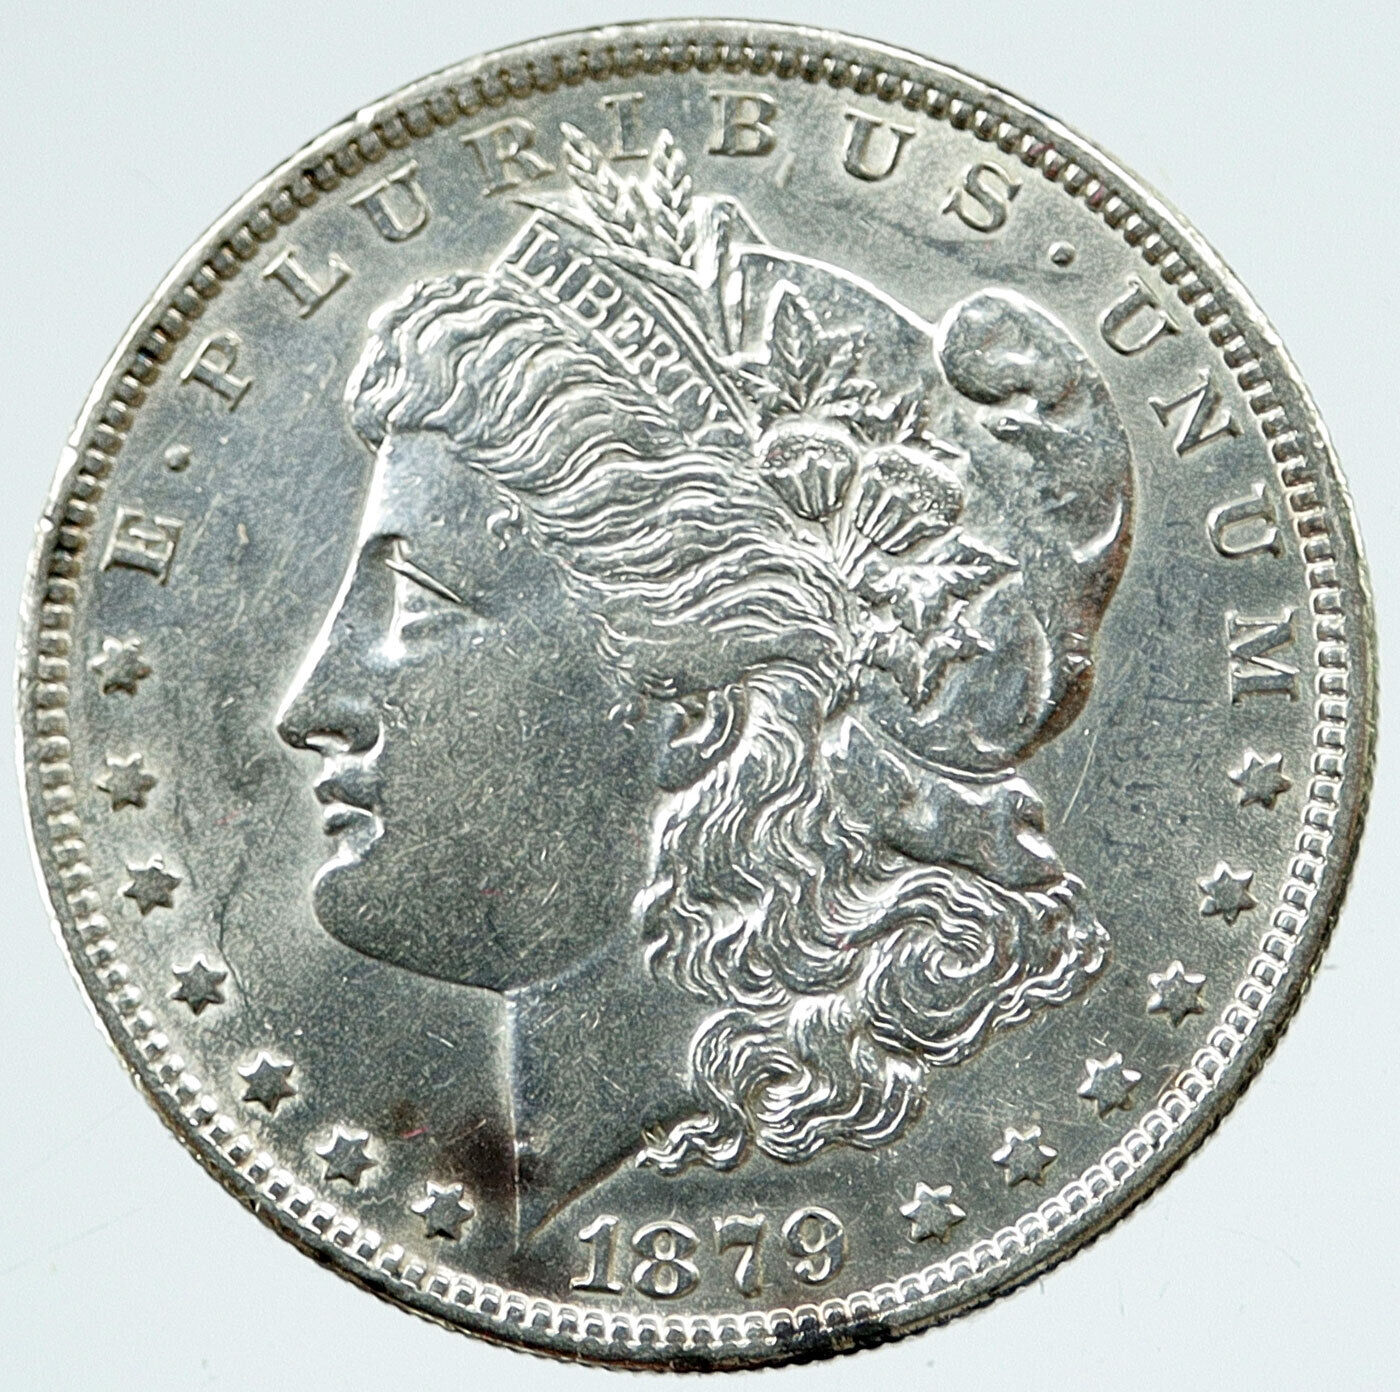 1879 O UNITED STATES of America EAGLE Old SILVER Morgan US Dollar Coin i117139